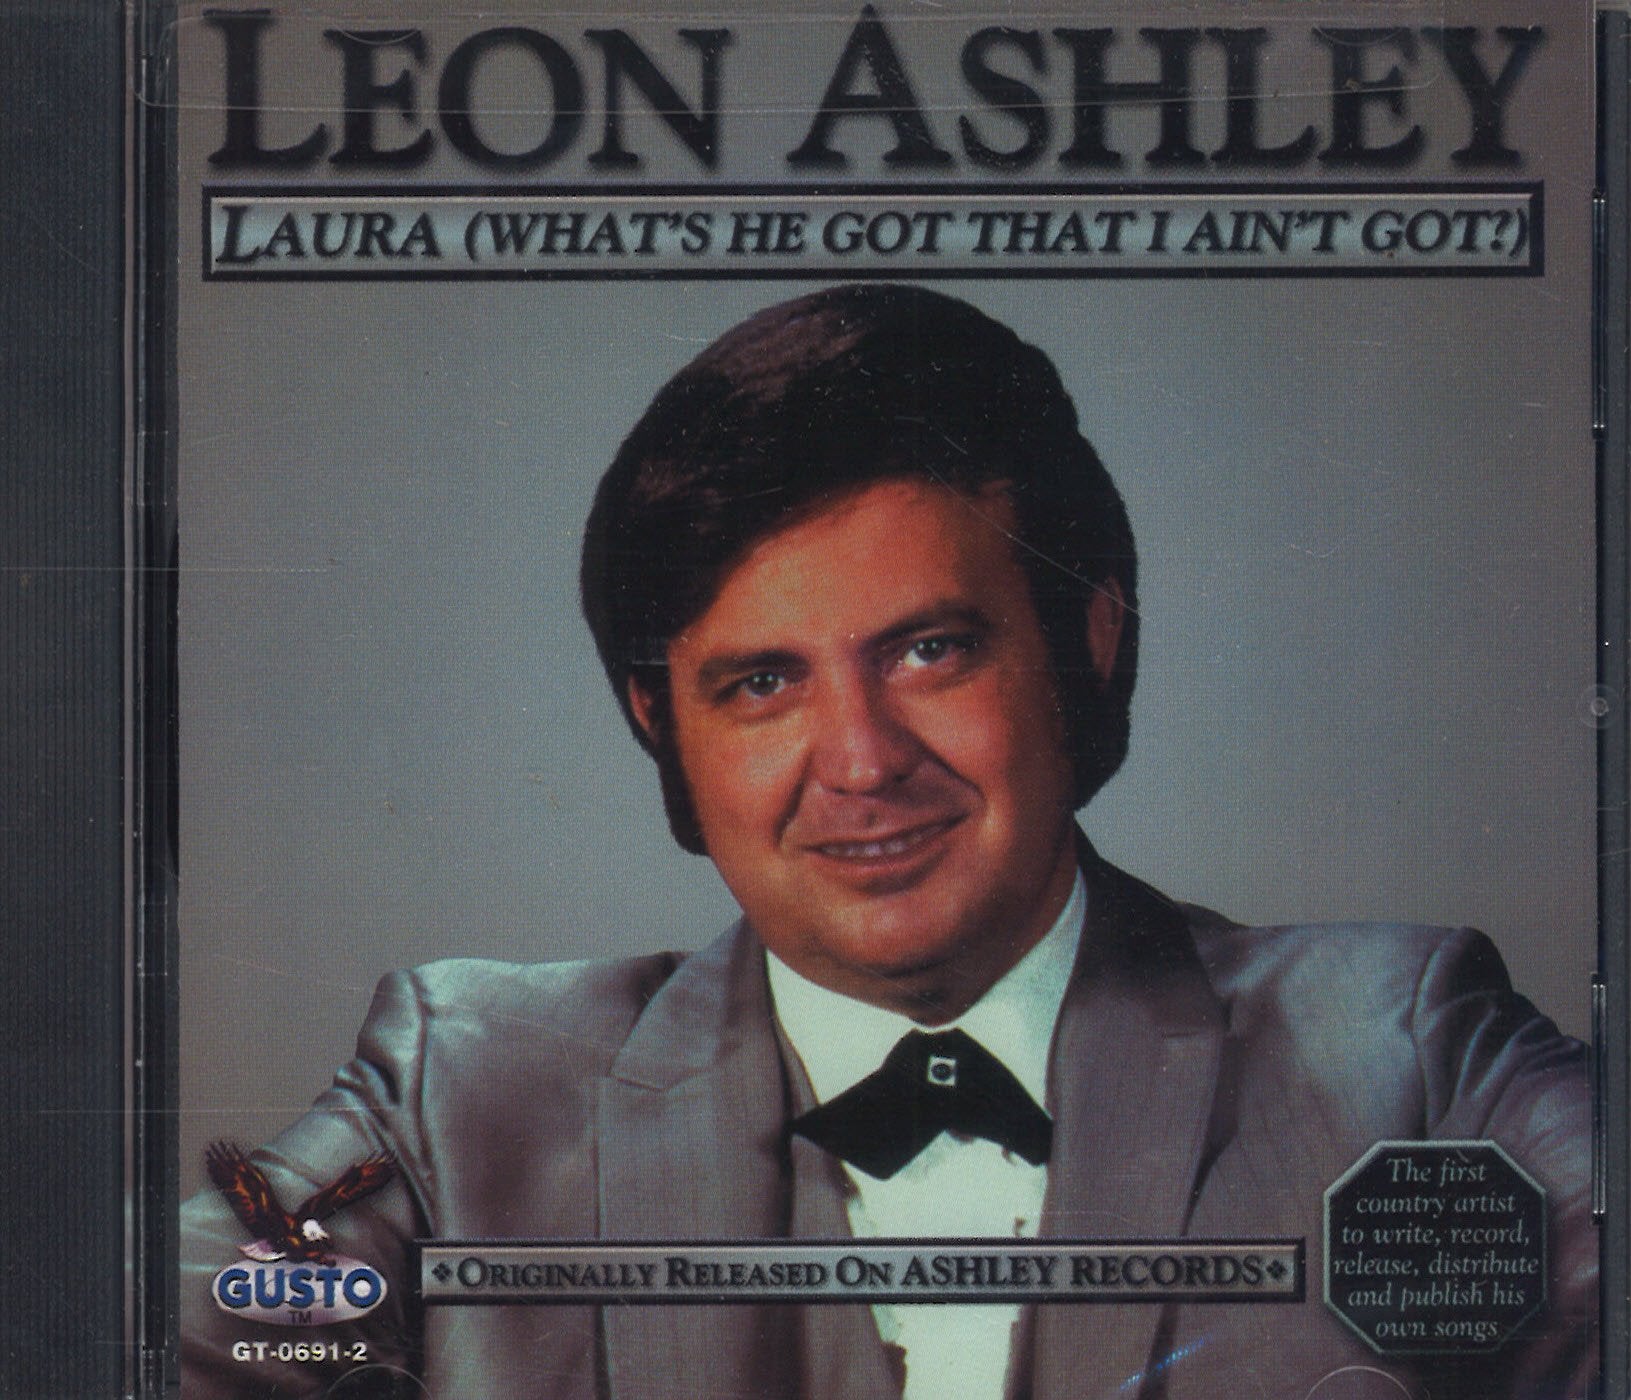 Leon Ashley Laura (What's He Got That I Ain't Got?)